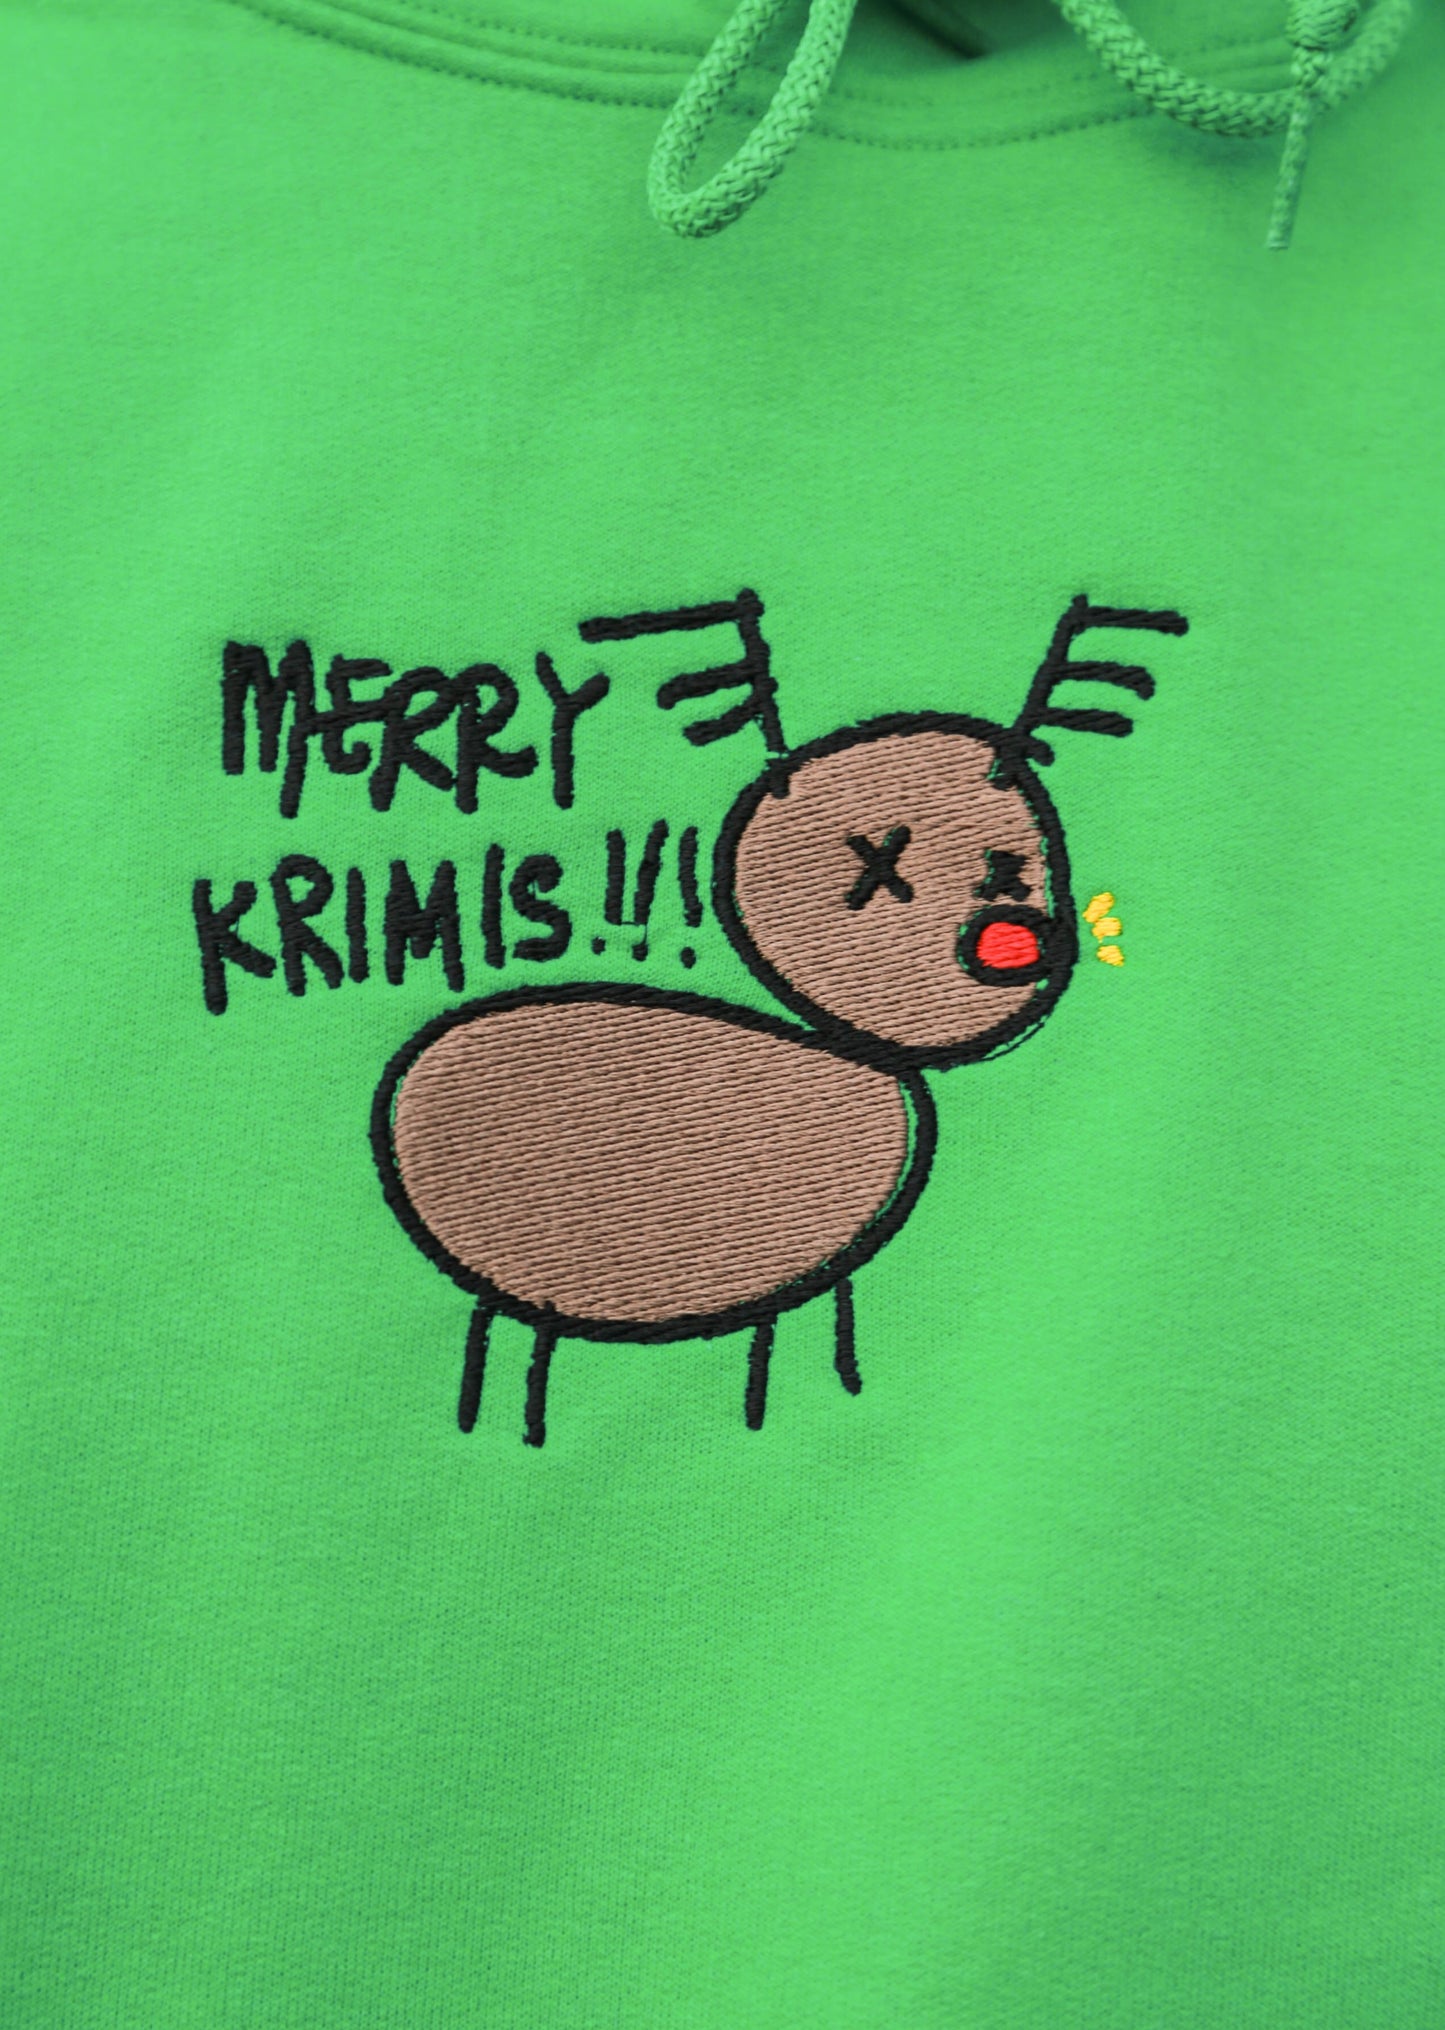 Merry Krimis Embroidery